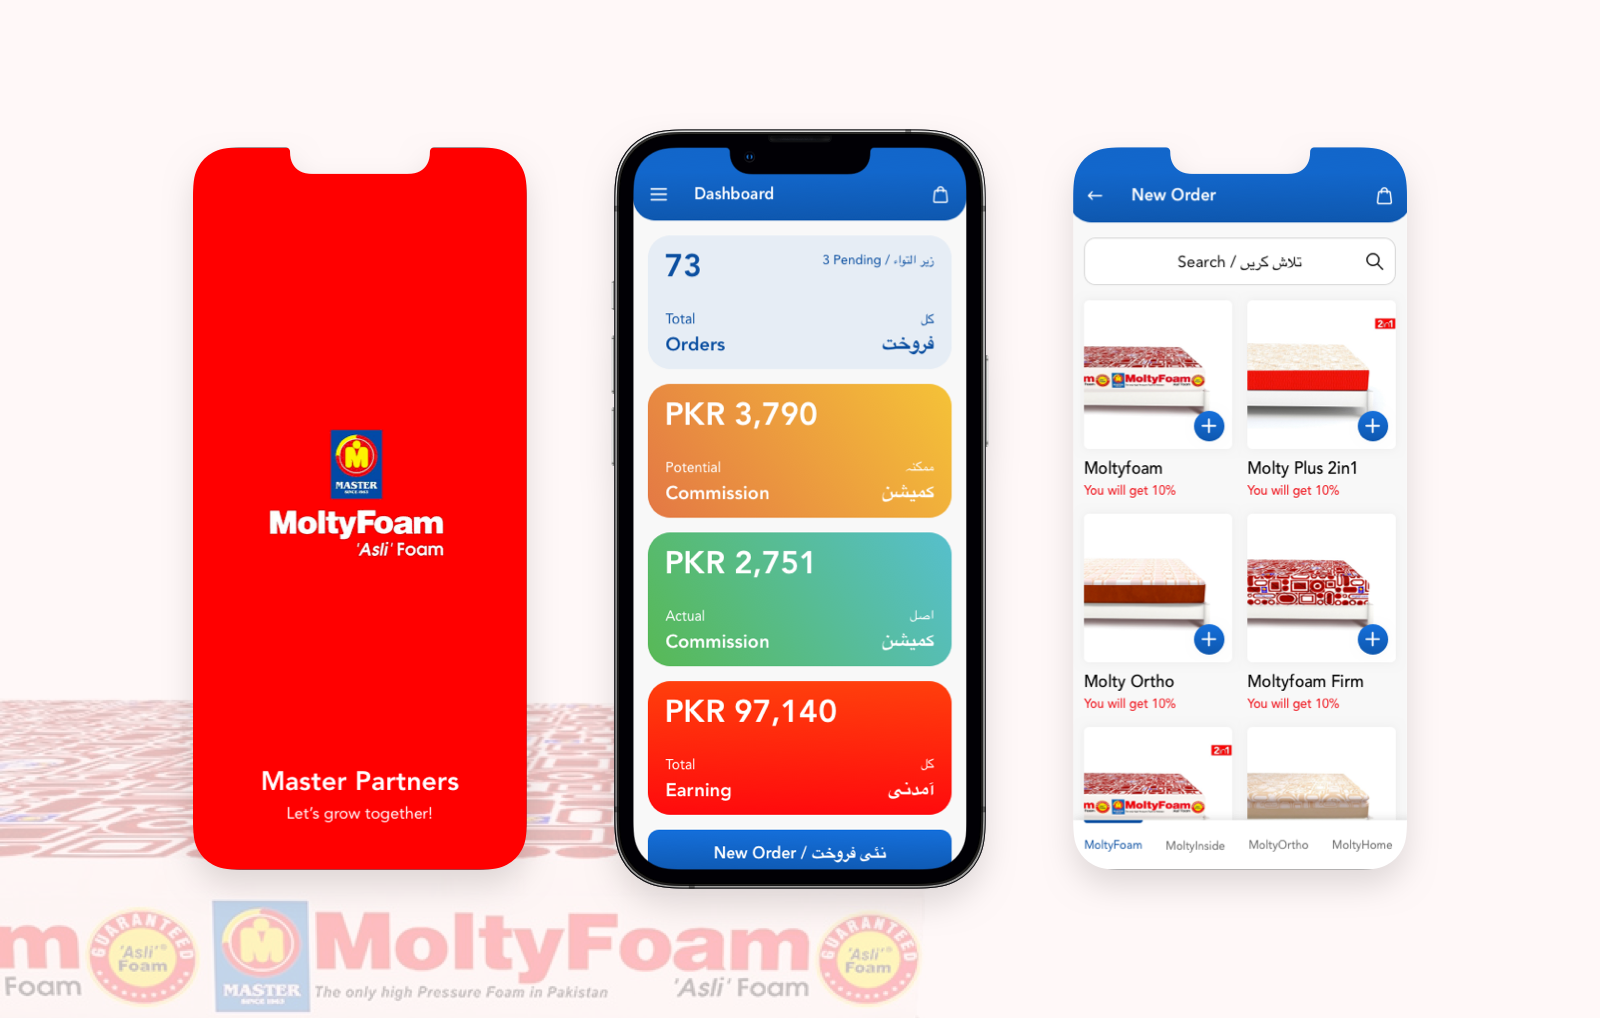 MoltyFoam - App For Affiliate Sales